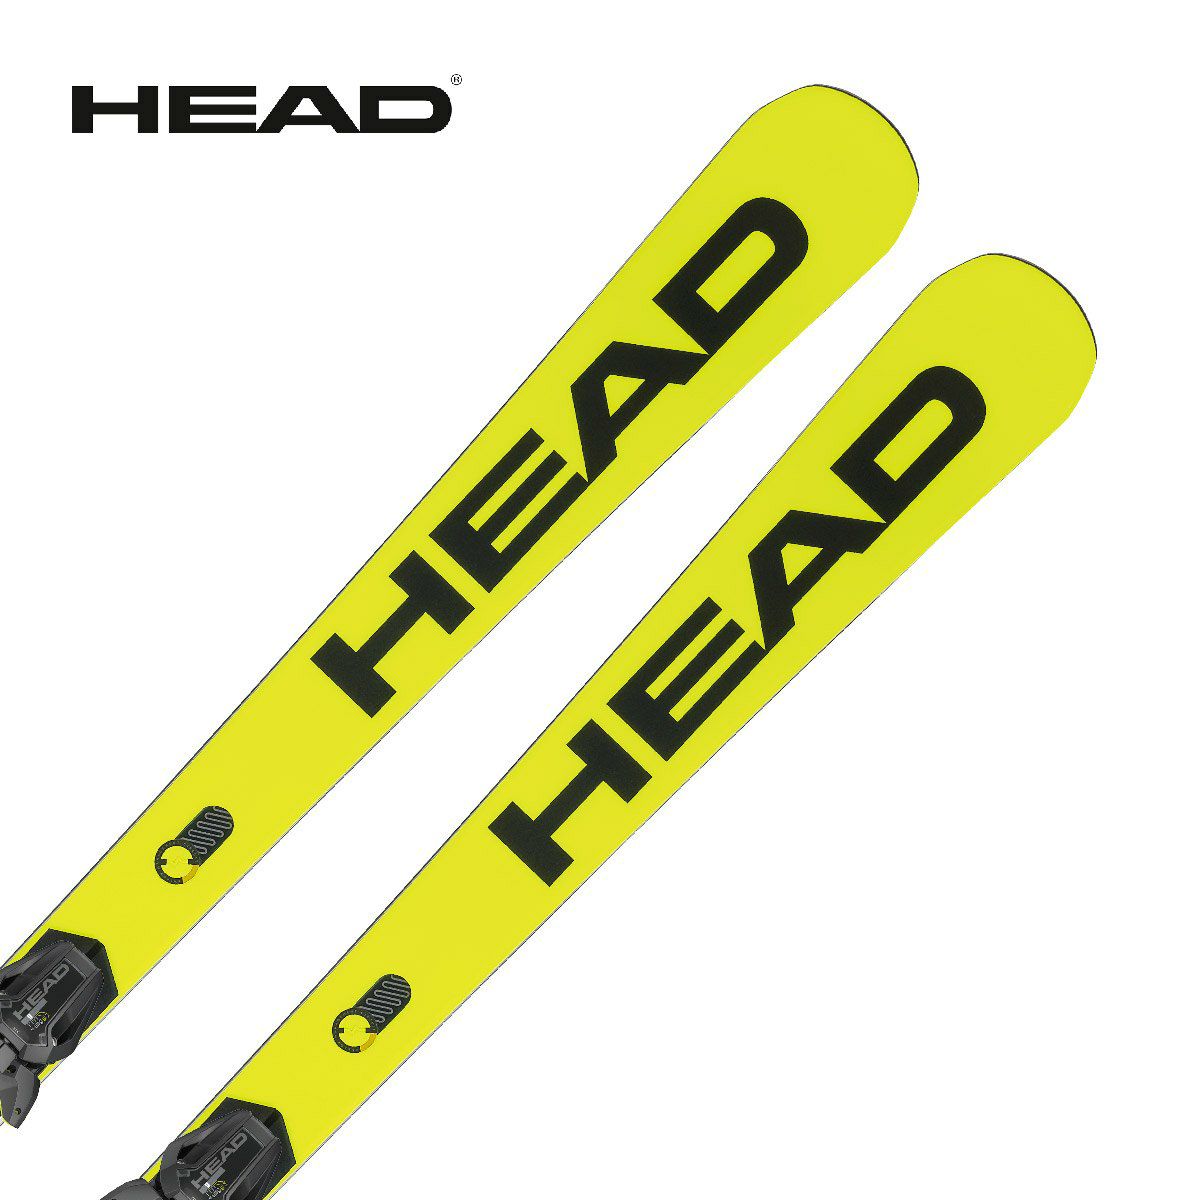 worldcup ヘッド rebels スキー板 - スキー板の人気商品・通販・価格 